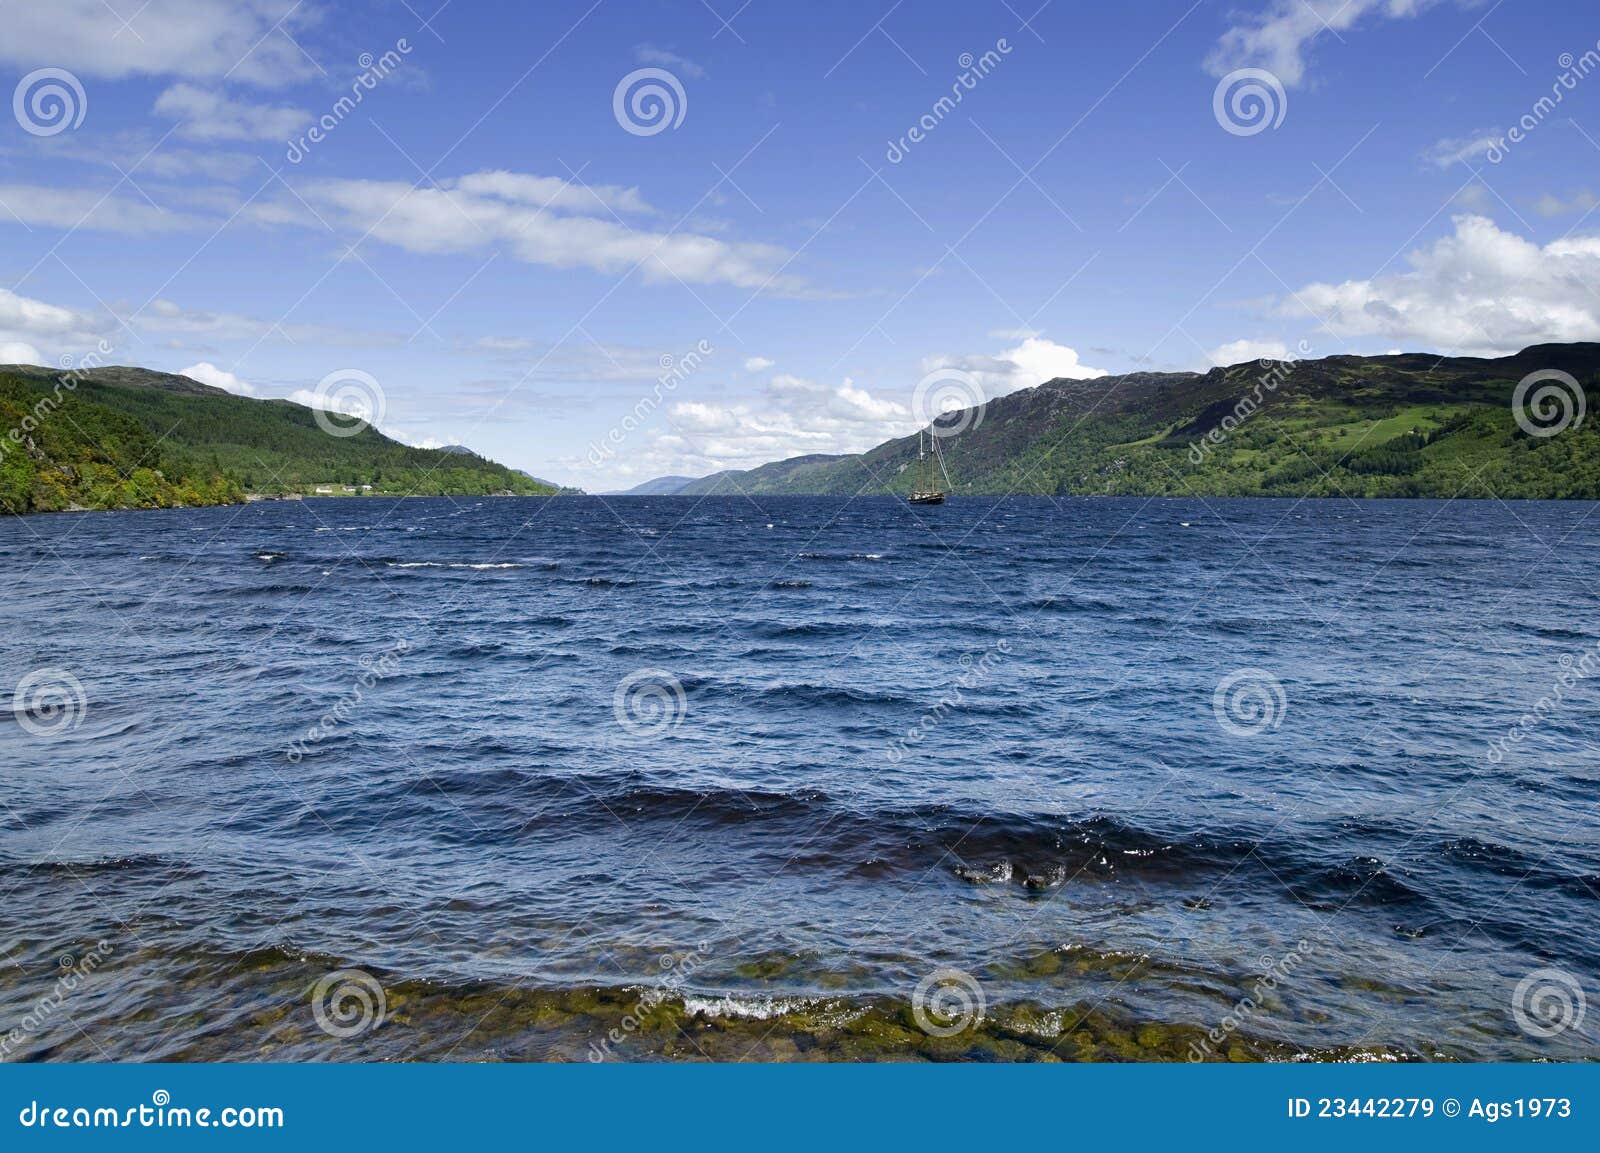 Loch Ness stock image. Image of landscape, highland, kingdom - 23442279